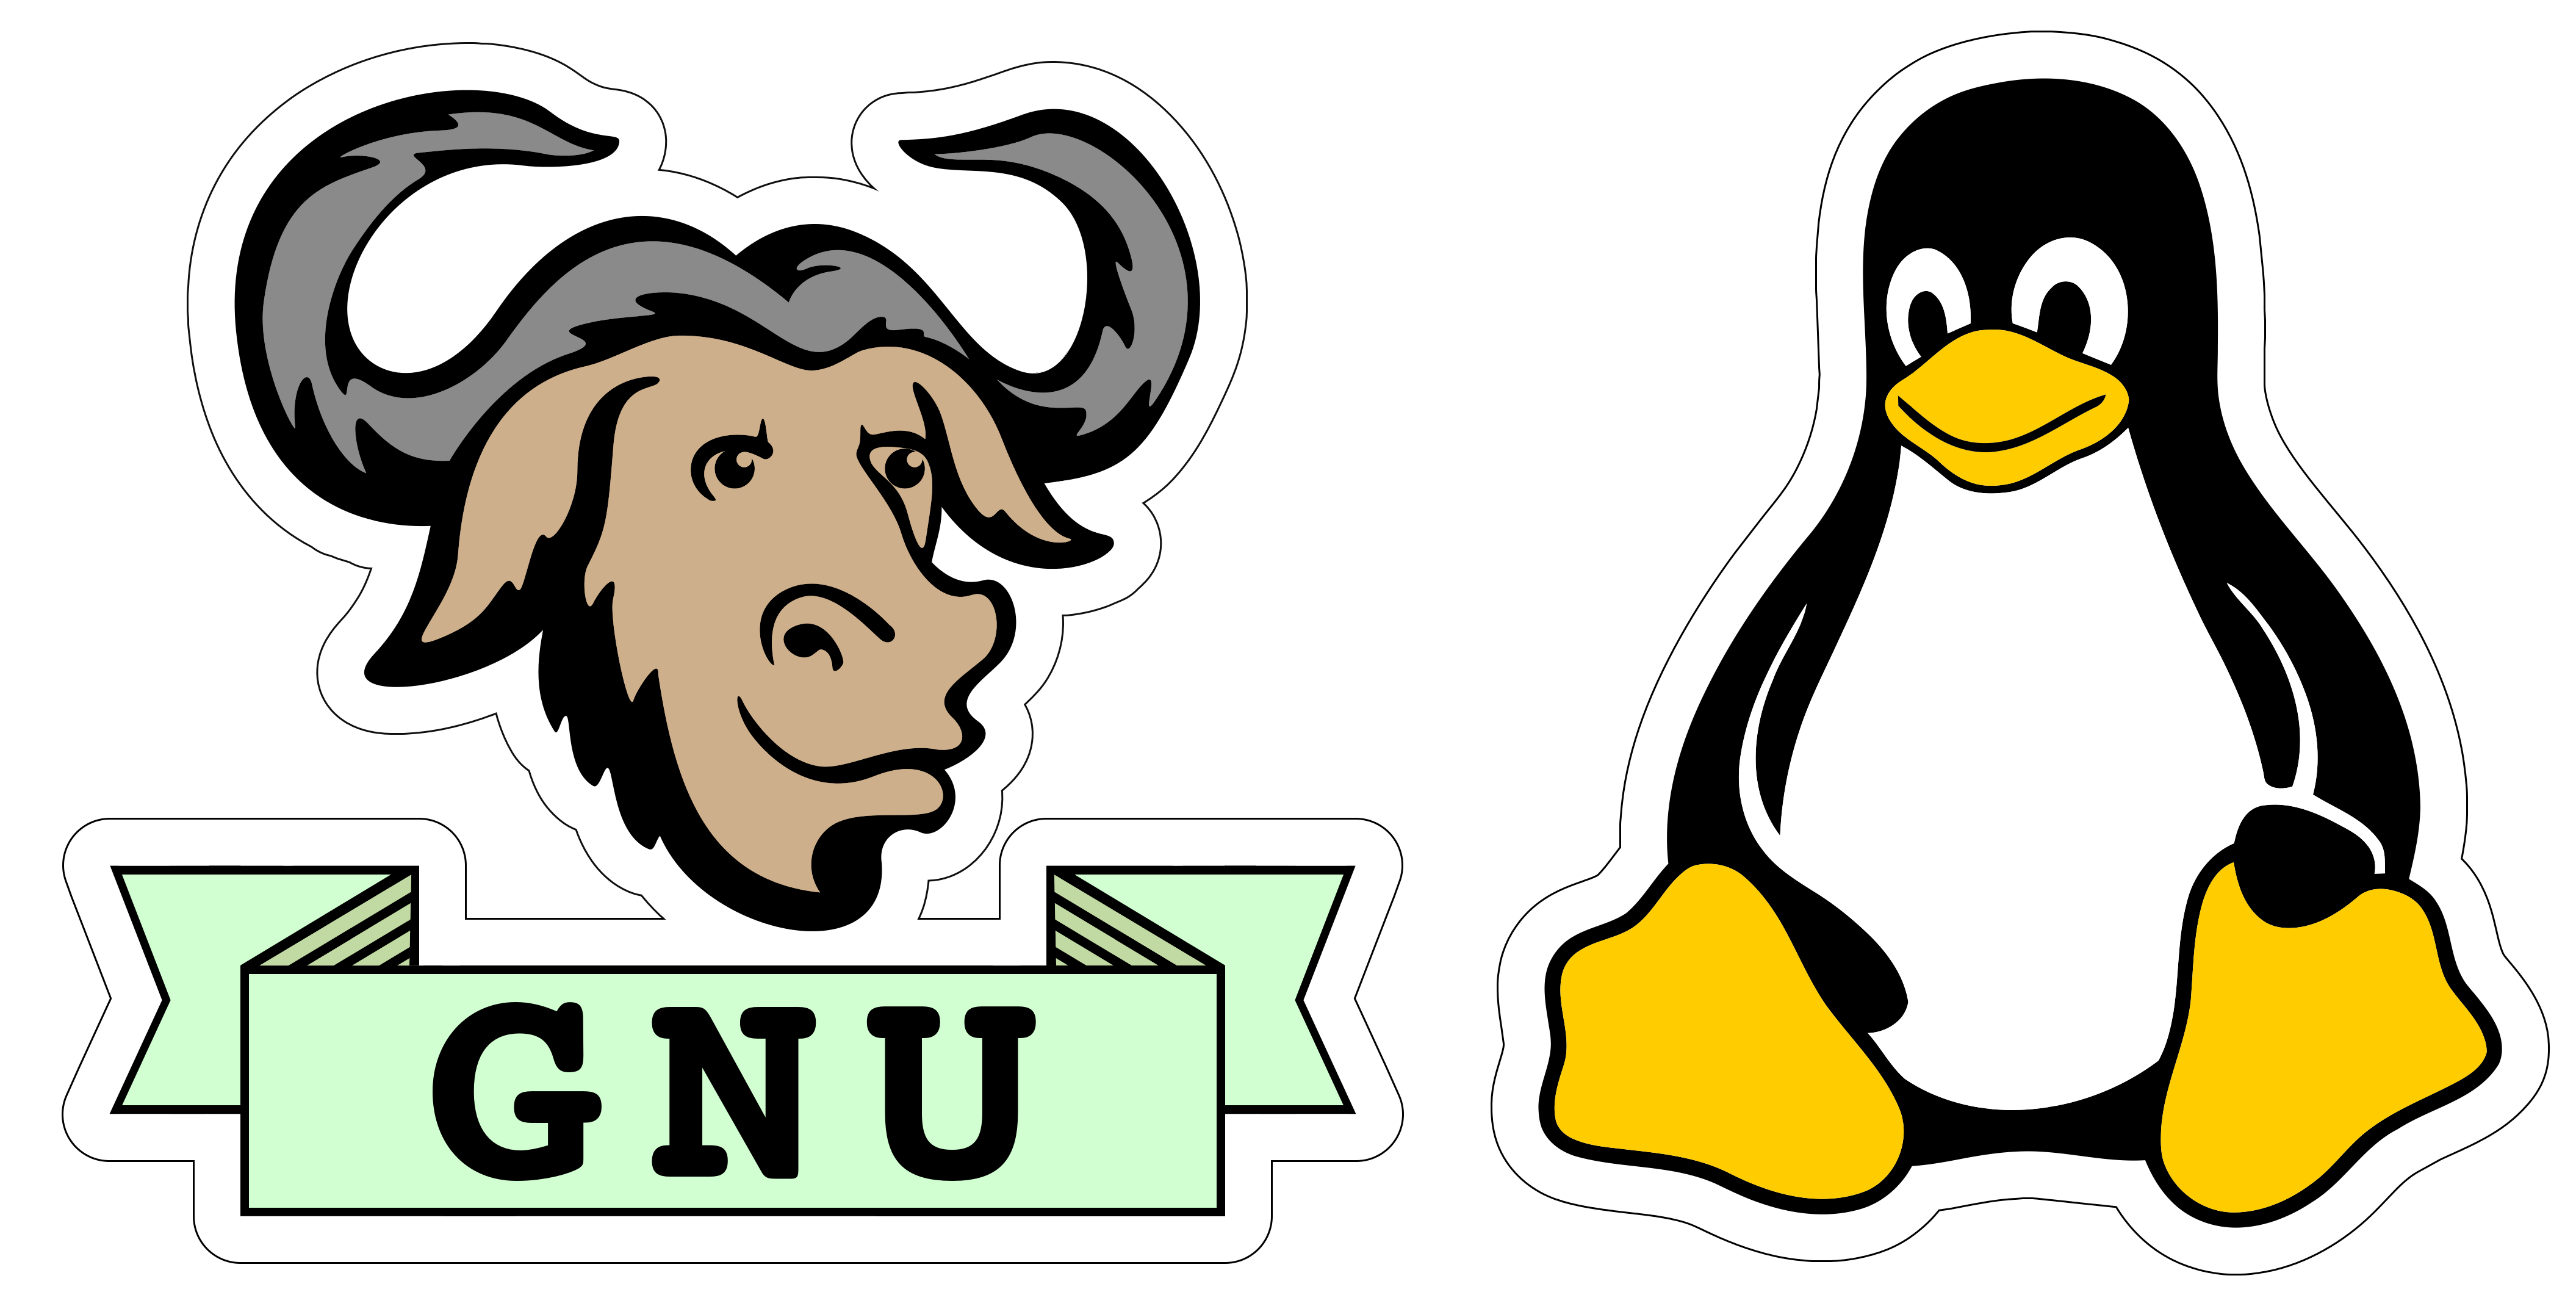 Gnu logo and Linux logo